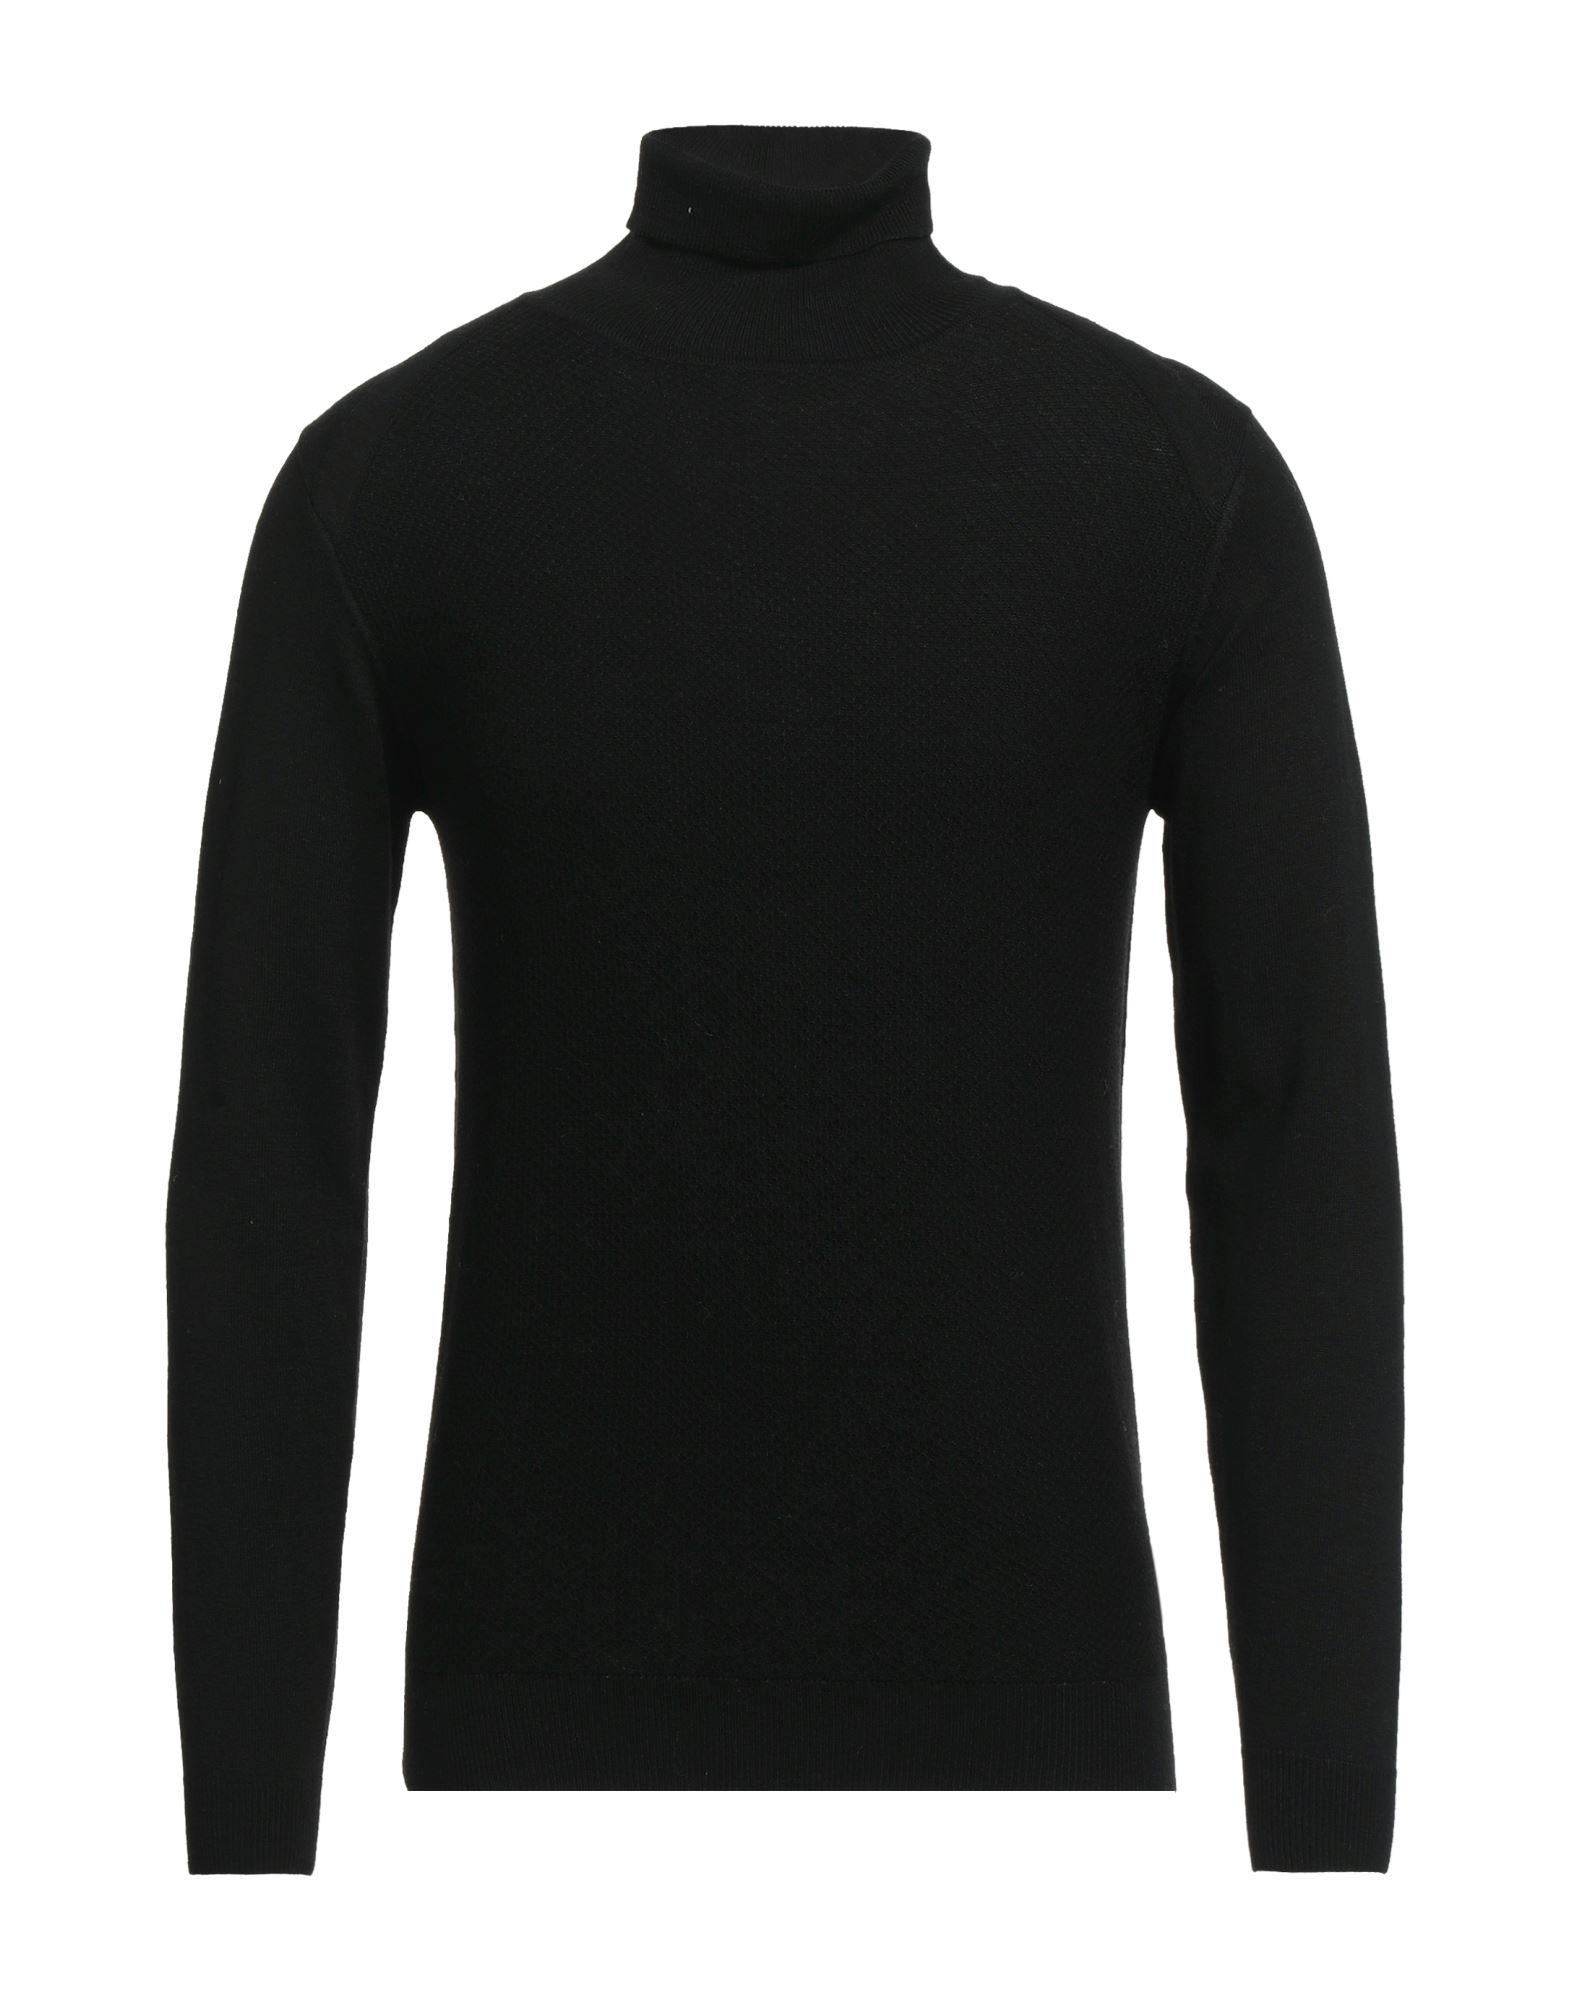 Gazzarrini Man Turtleneck Black Size M Polyester, Acrylic, Polyamide, Merino Wool